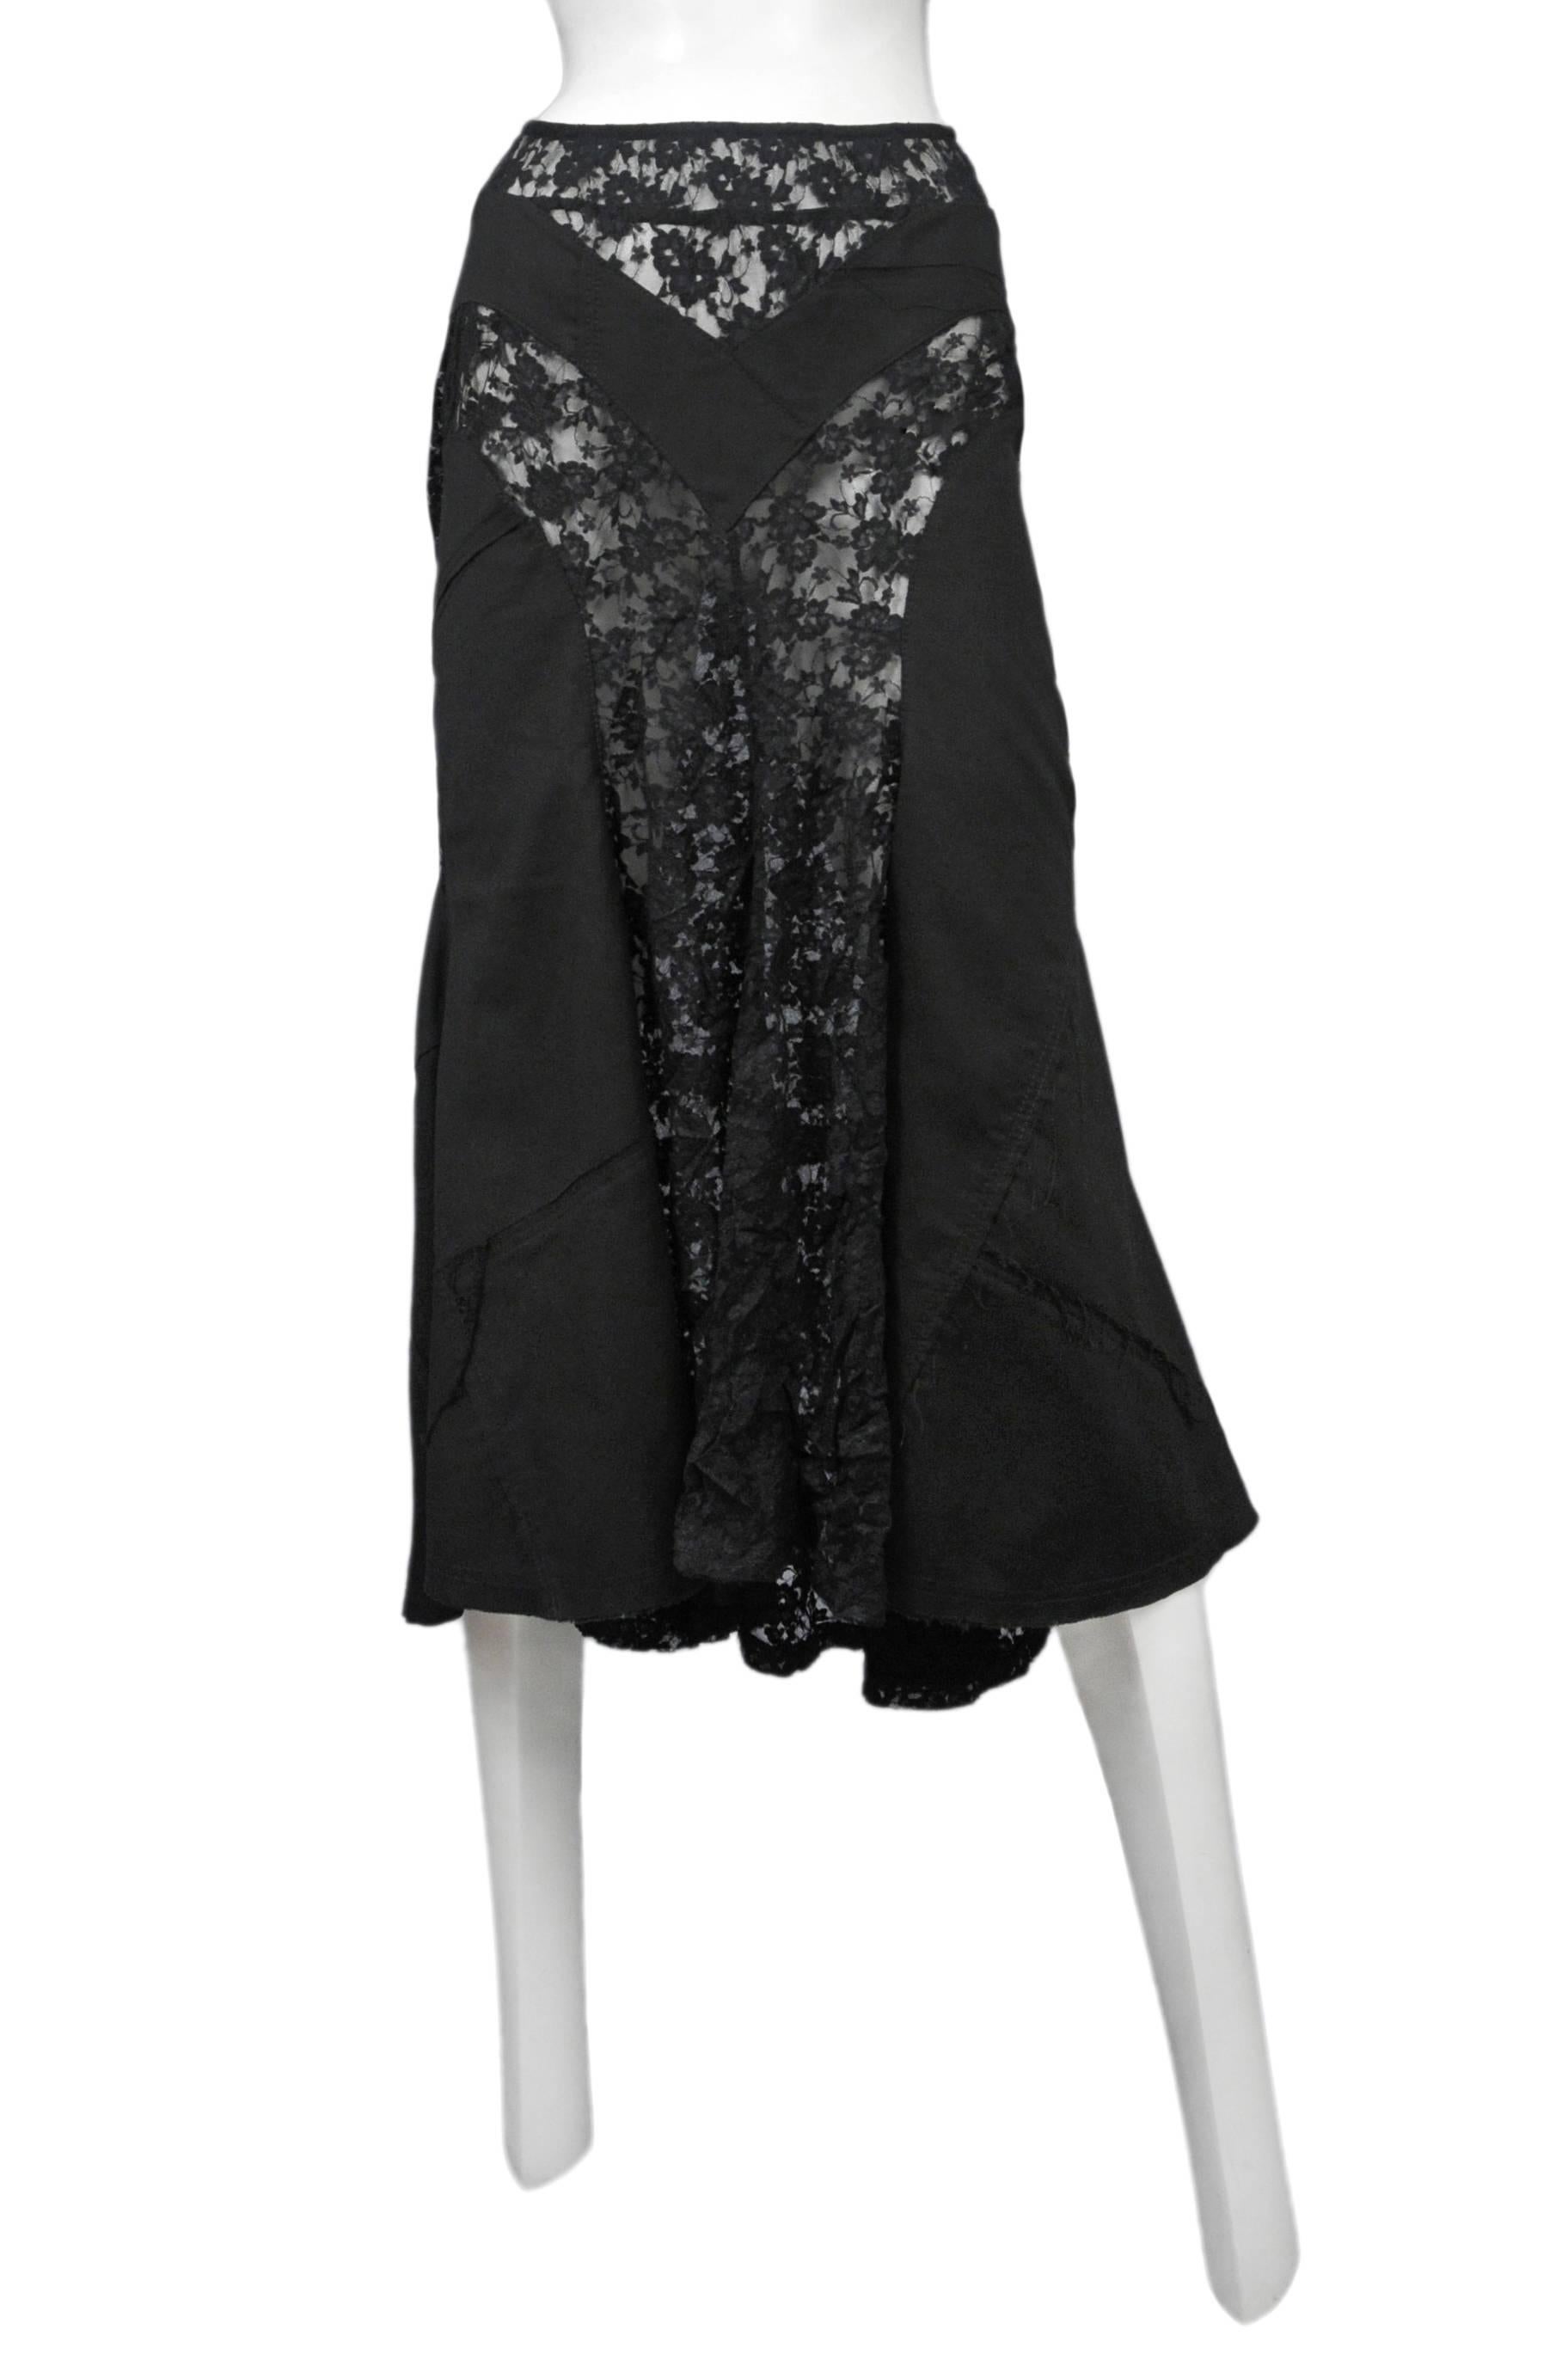 Vintage Junya Watanabe black below the knee skirt featuring lace paneling throughout.